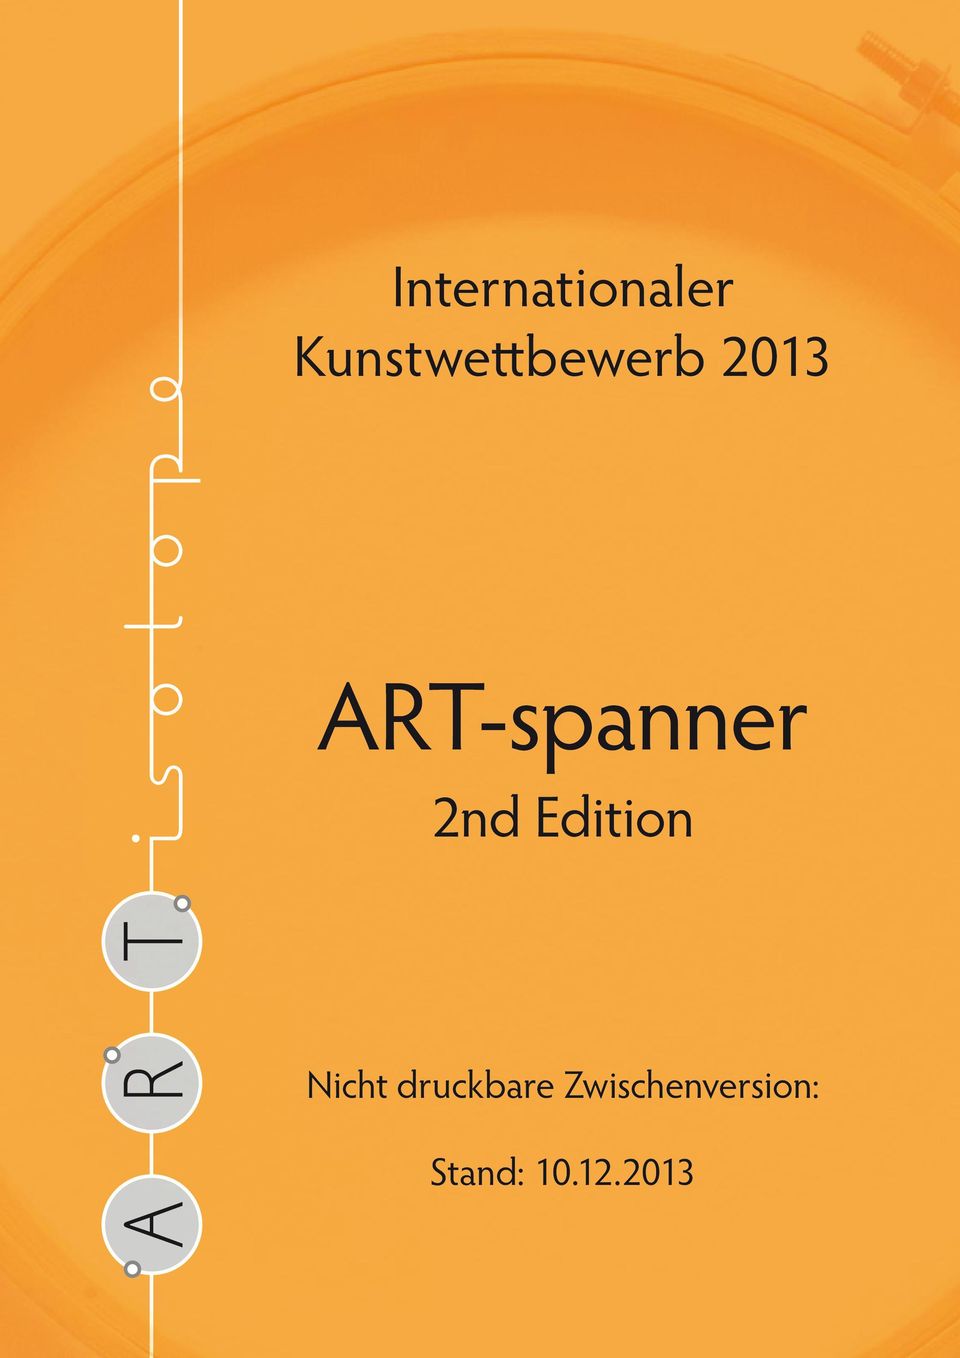 ART-spanner 2nd Edition